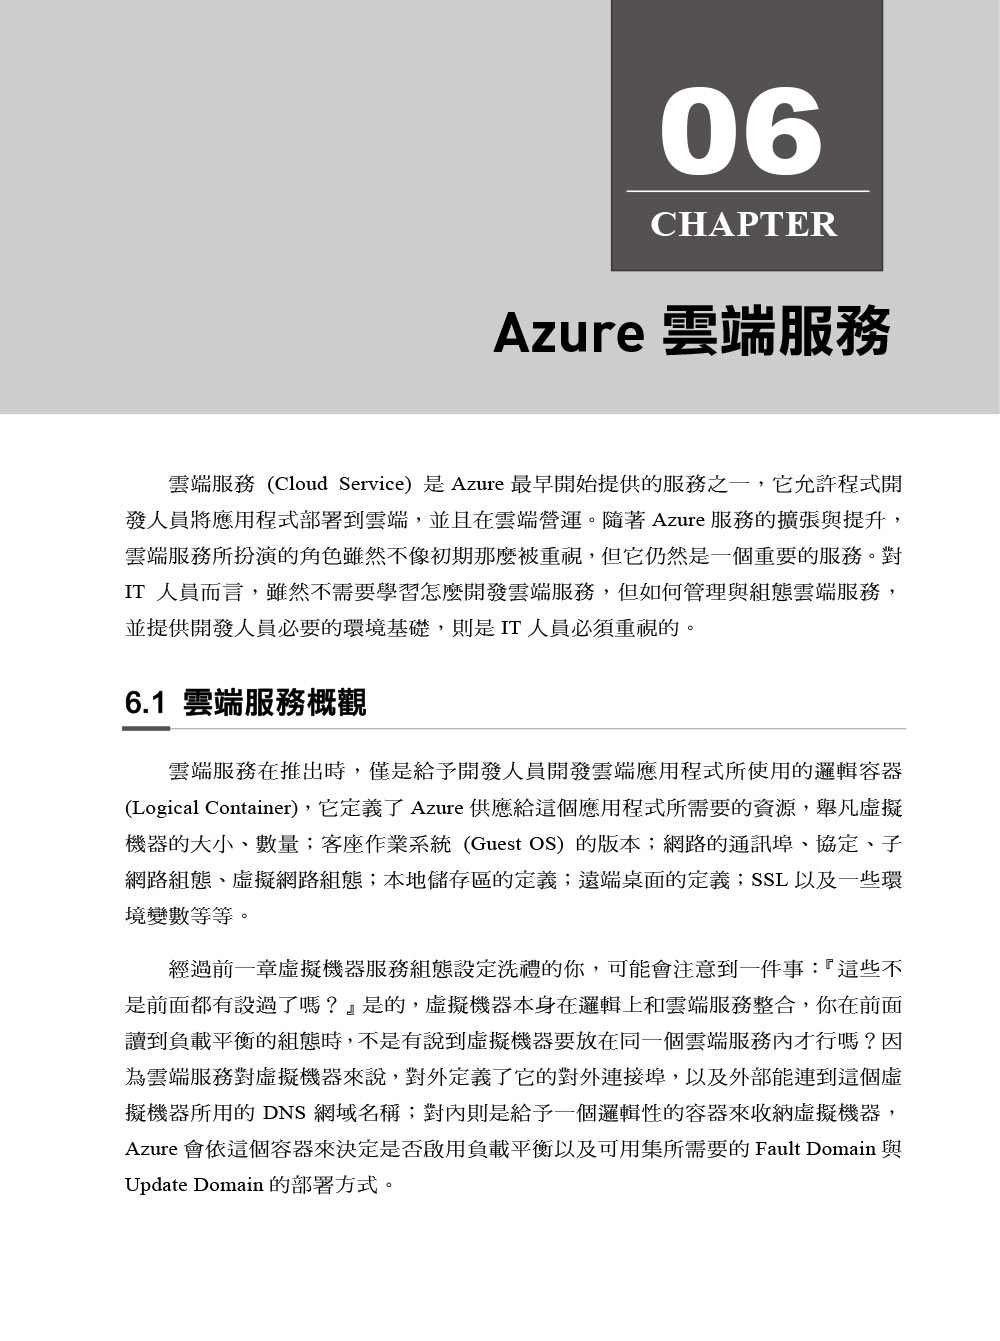 ►GO►最新優惠► 【書籍】Microsoft Azure教戰手札(第三版)：系統建置與管理篇